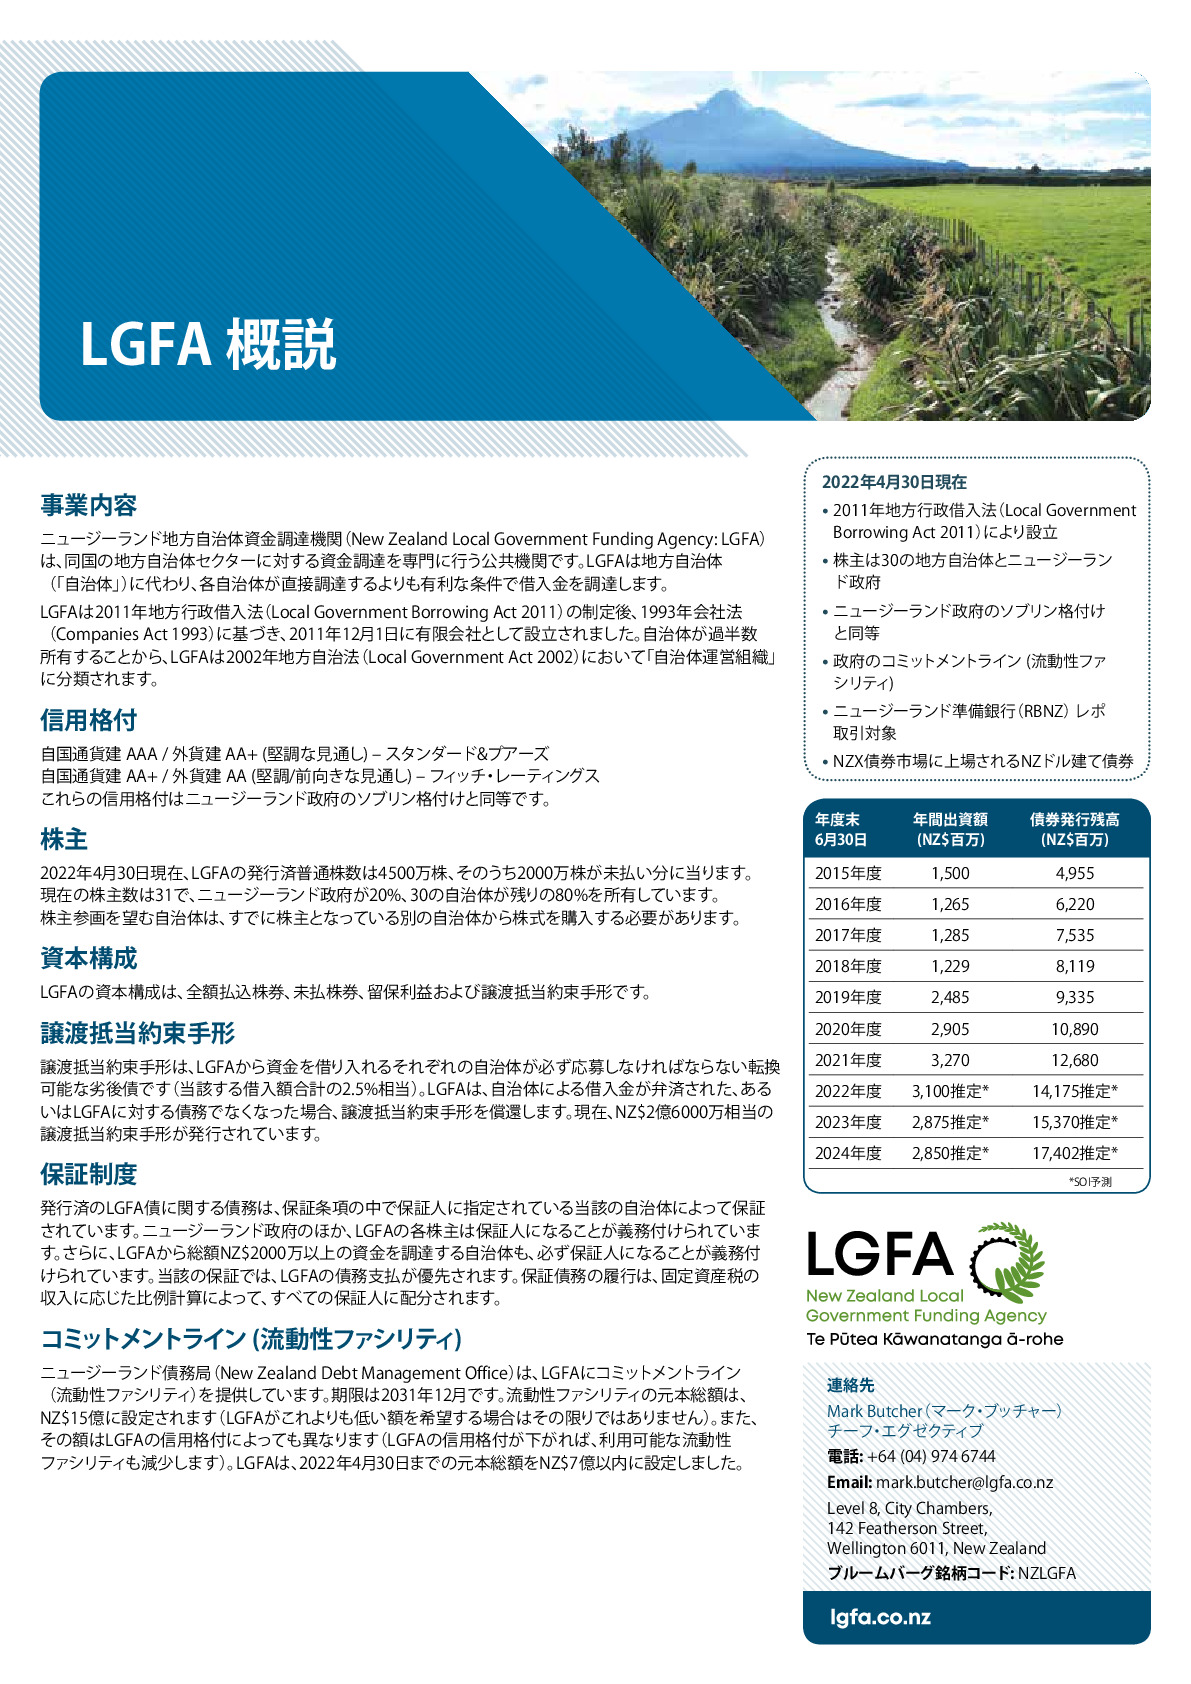 LGFA_Overview_Apr22 - Japanese (web)